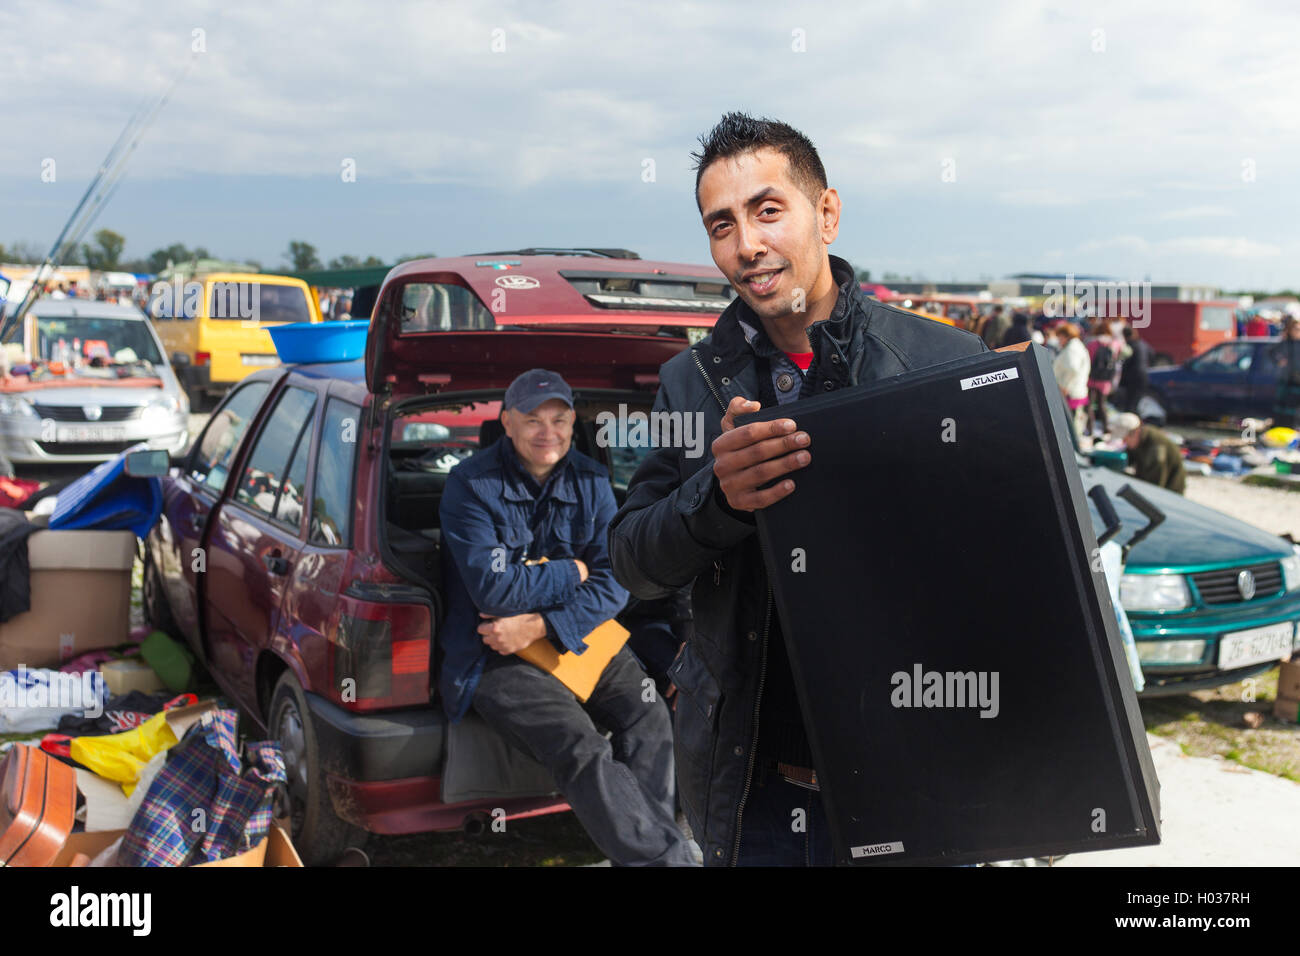 ZAGREB, CROATIA - OCTOBER 20, 2013: Roma salesman holding used speaker at Zagreb's flea market Hrelic. Stock Photo